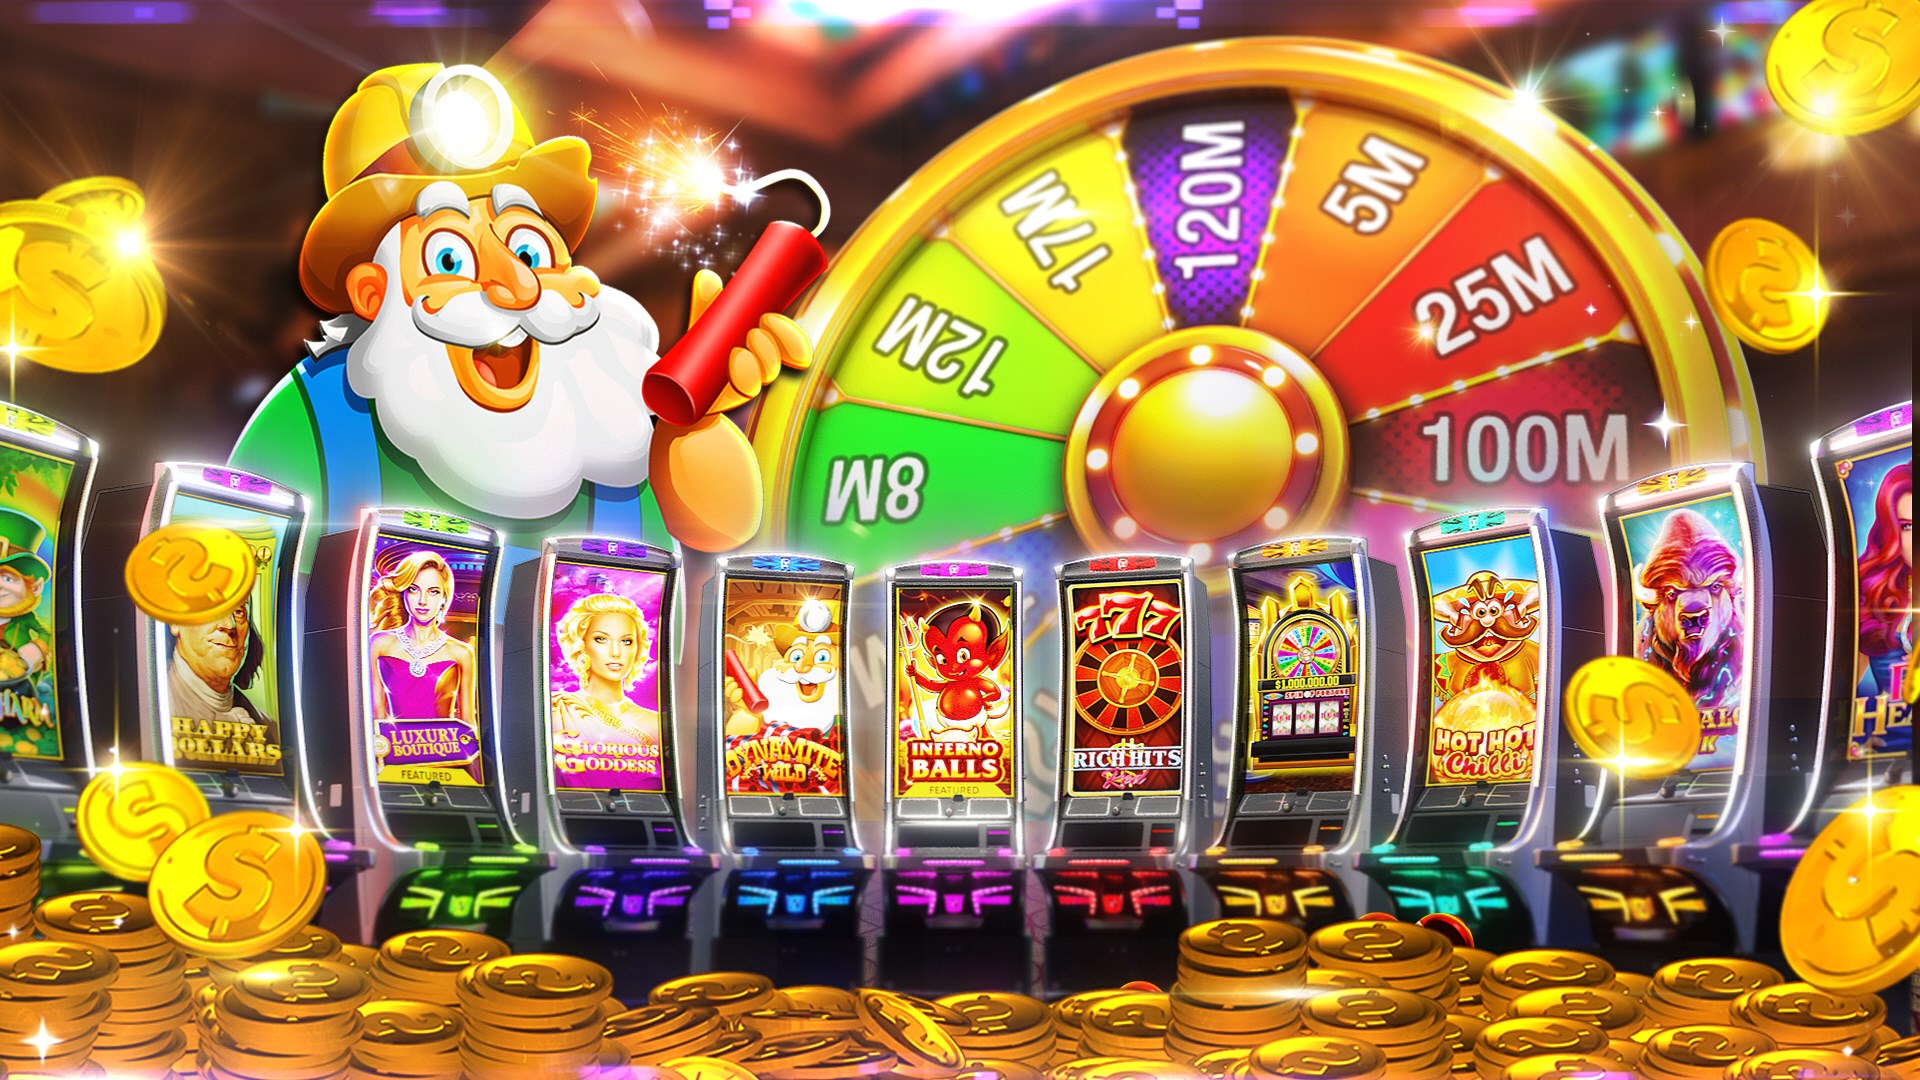 Vegas Party Casino Slots VIP Vegas Slot Machine Games - Win Big